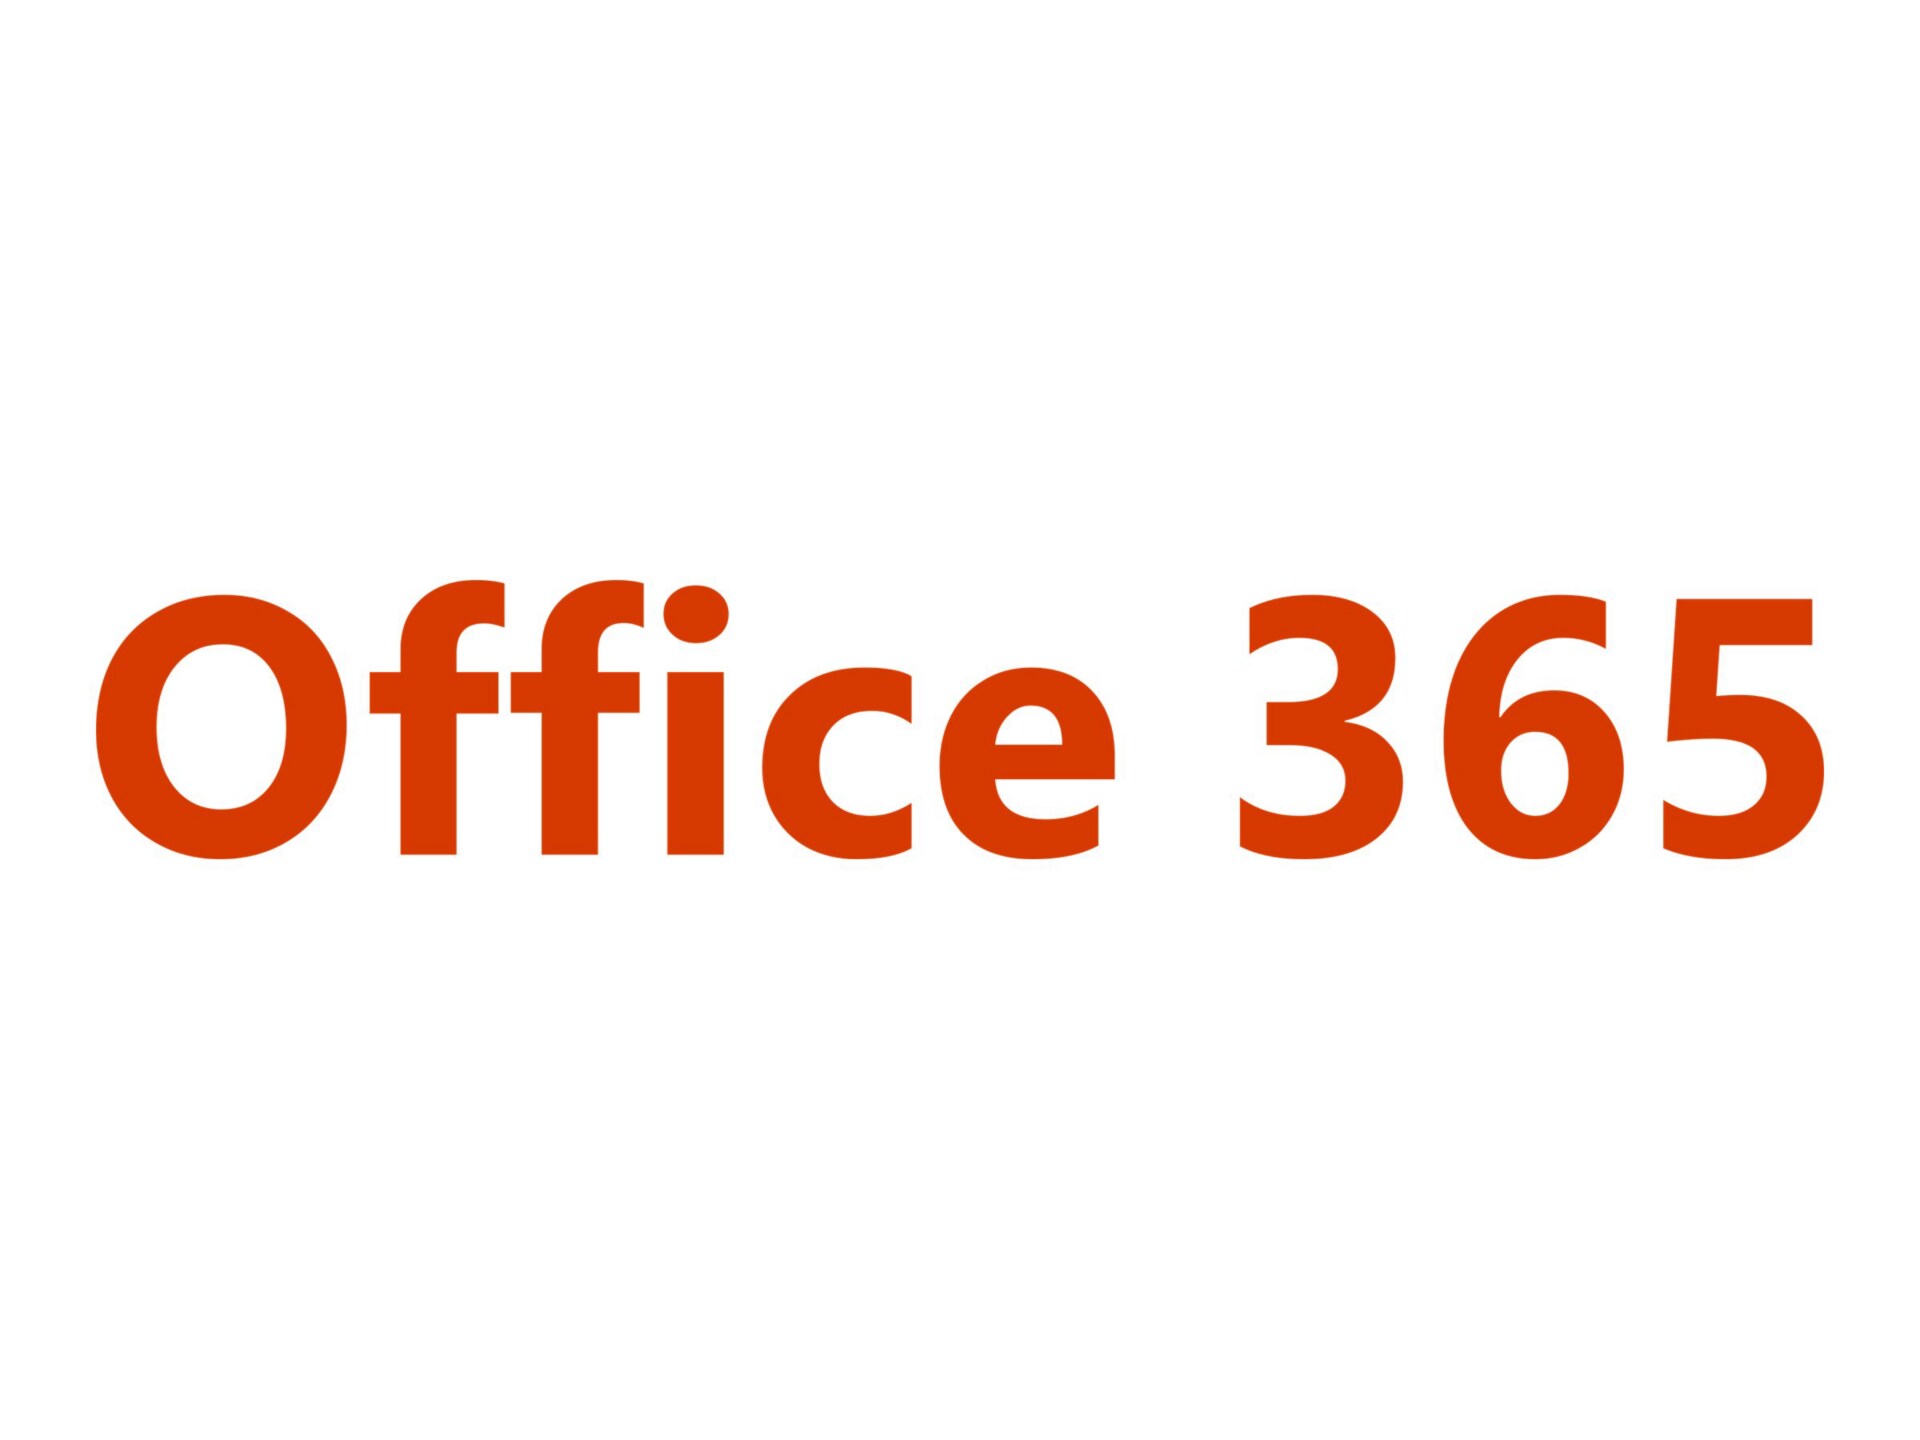 Microsoft Office 365 Enterprise E5 without PSTN Conferencing - transition l